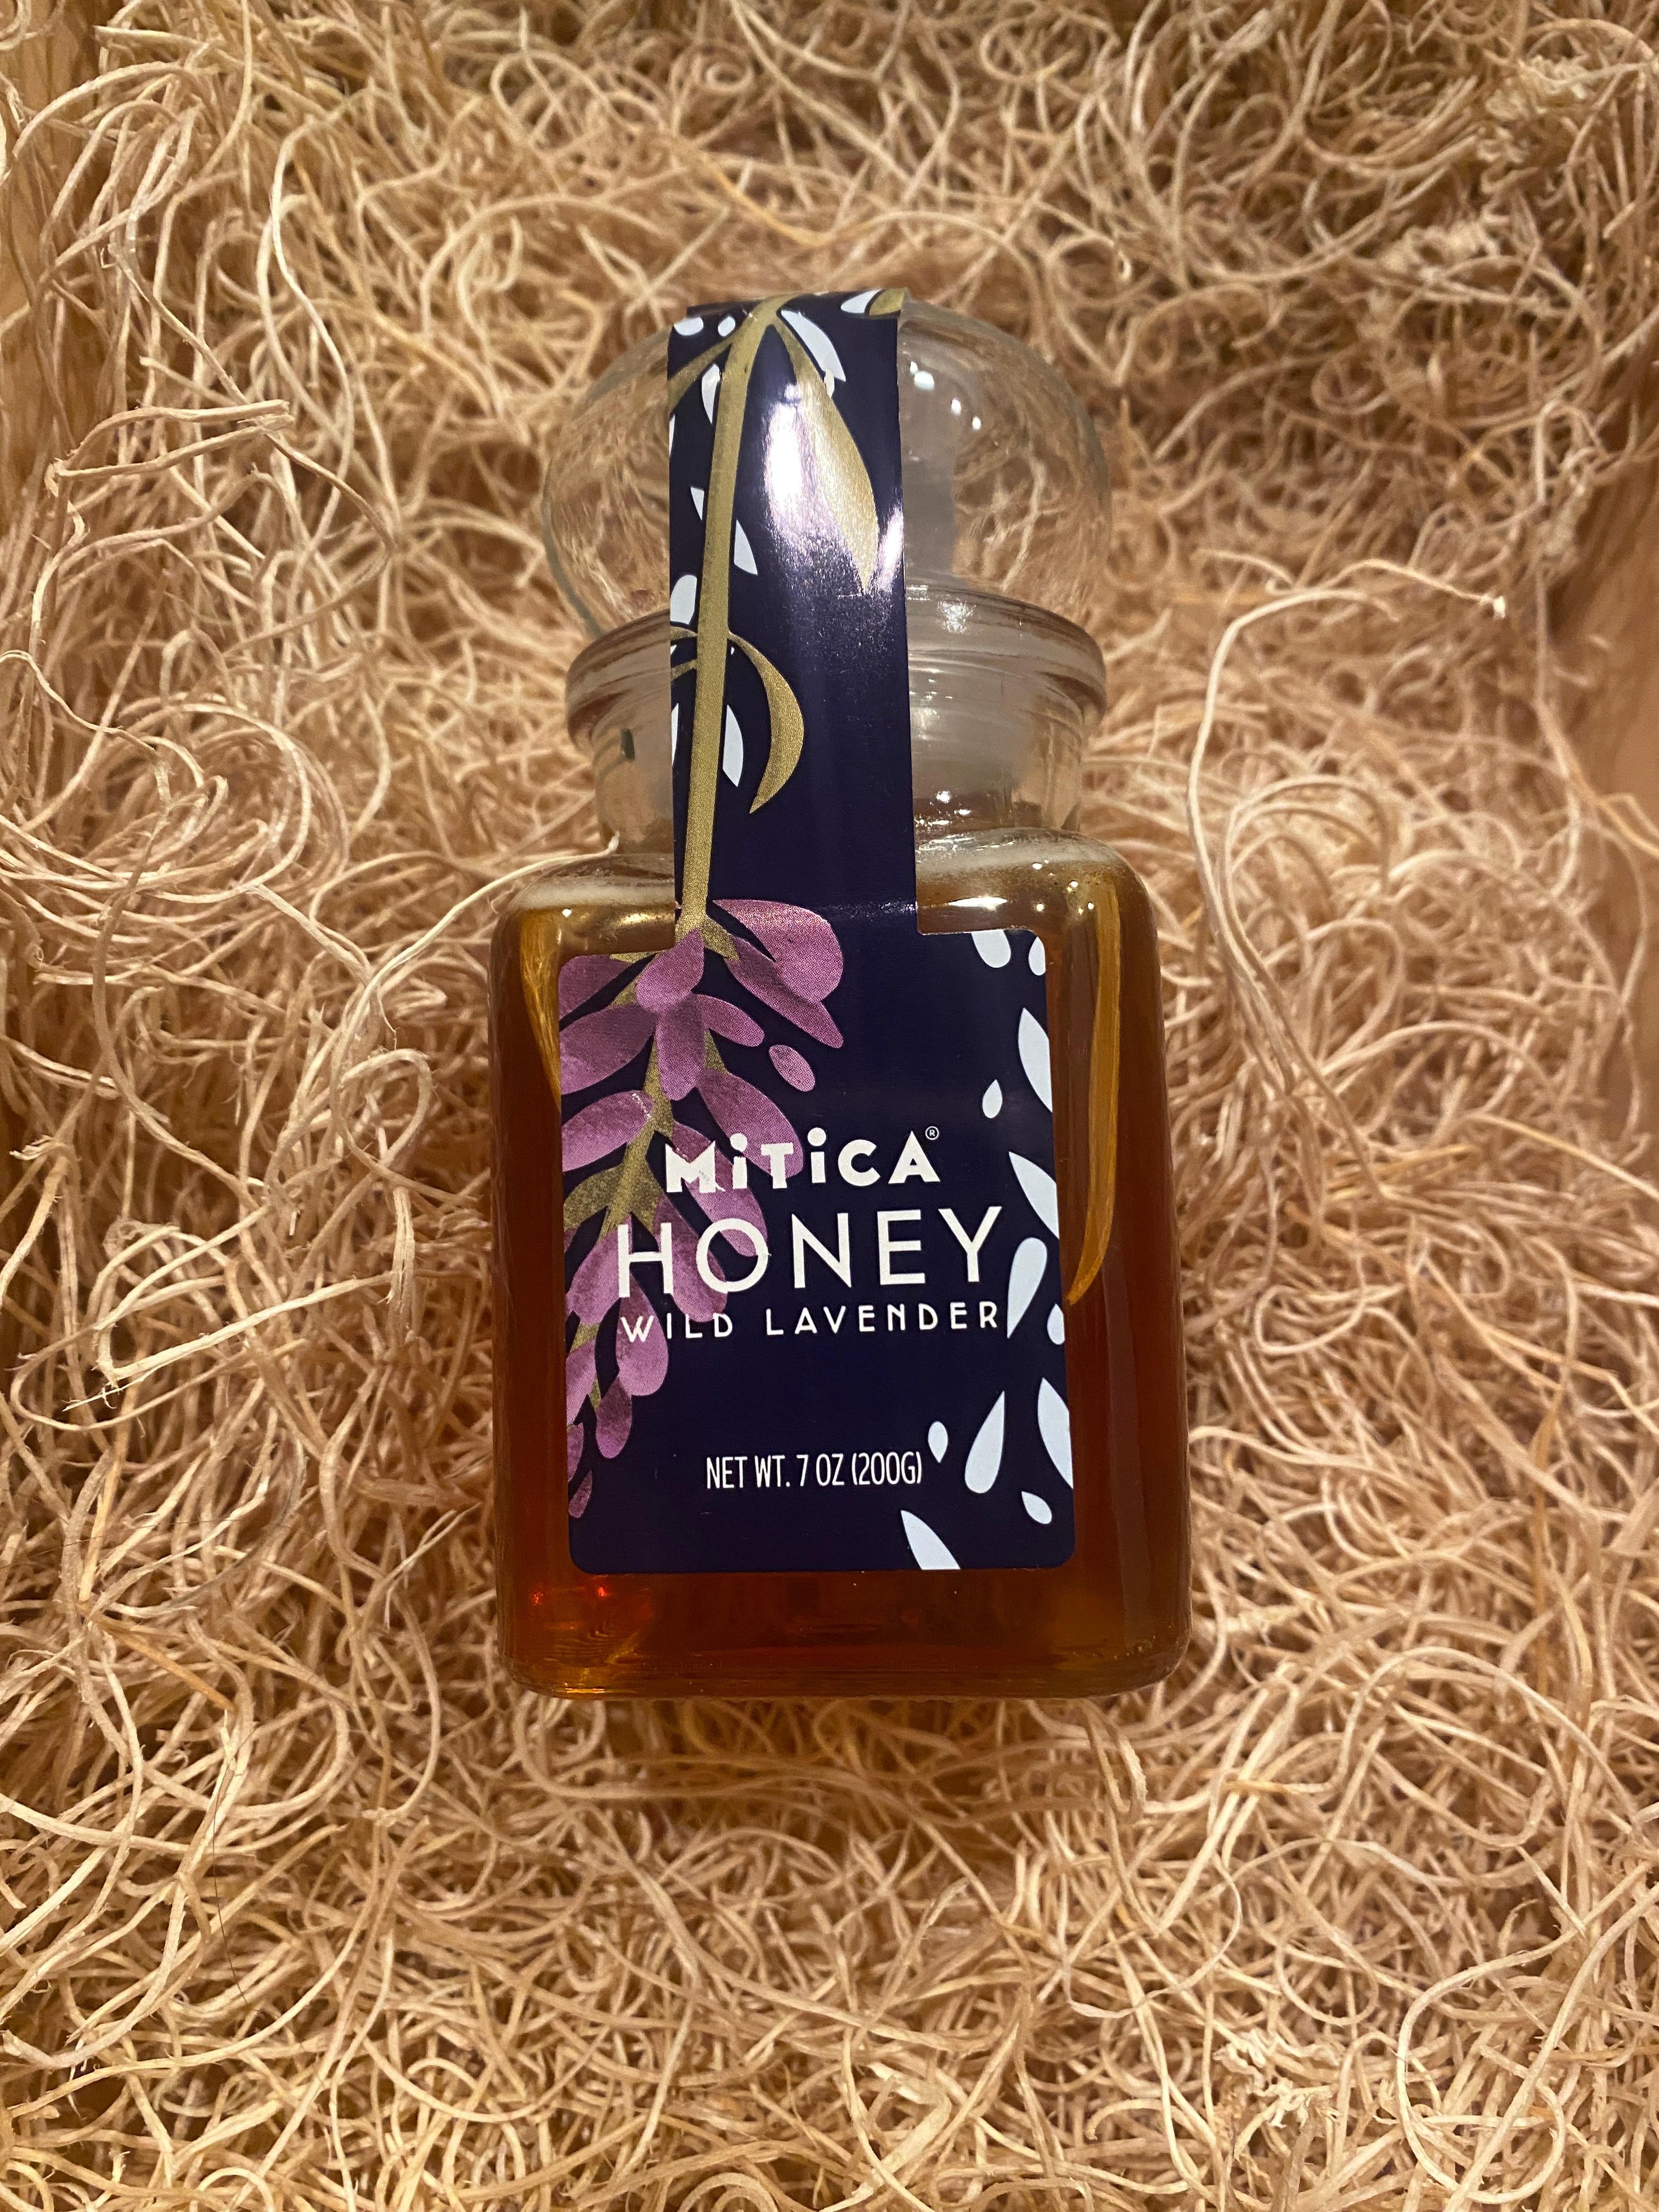 Mitica Wild Lavender Honey (7oz)